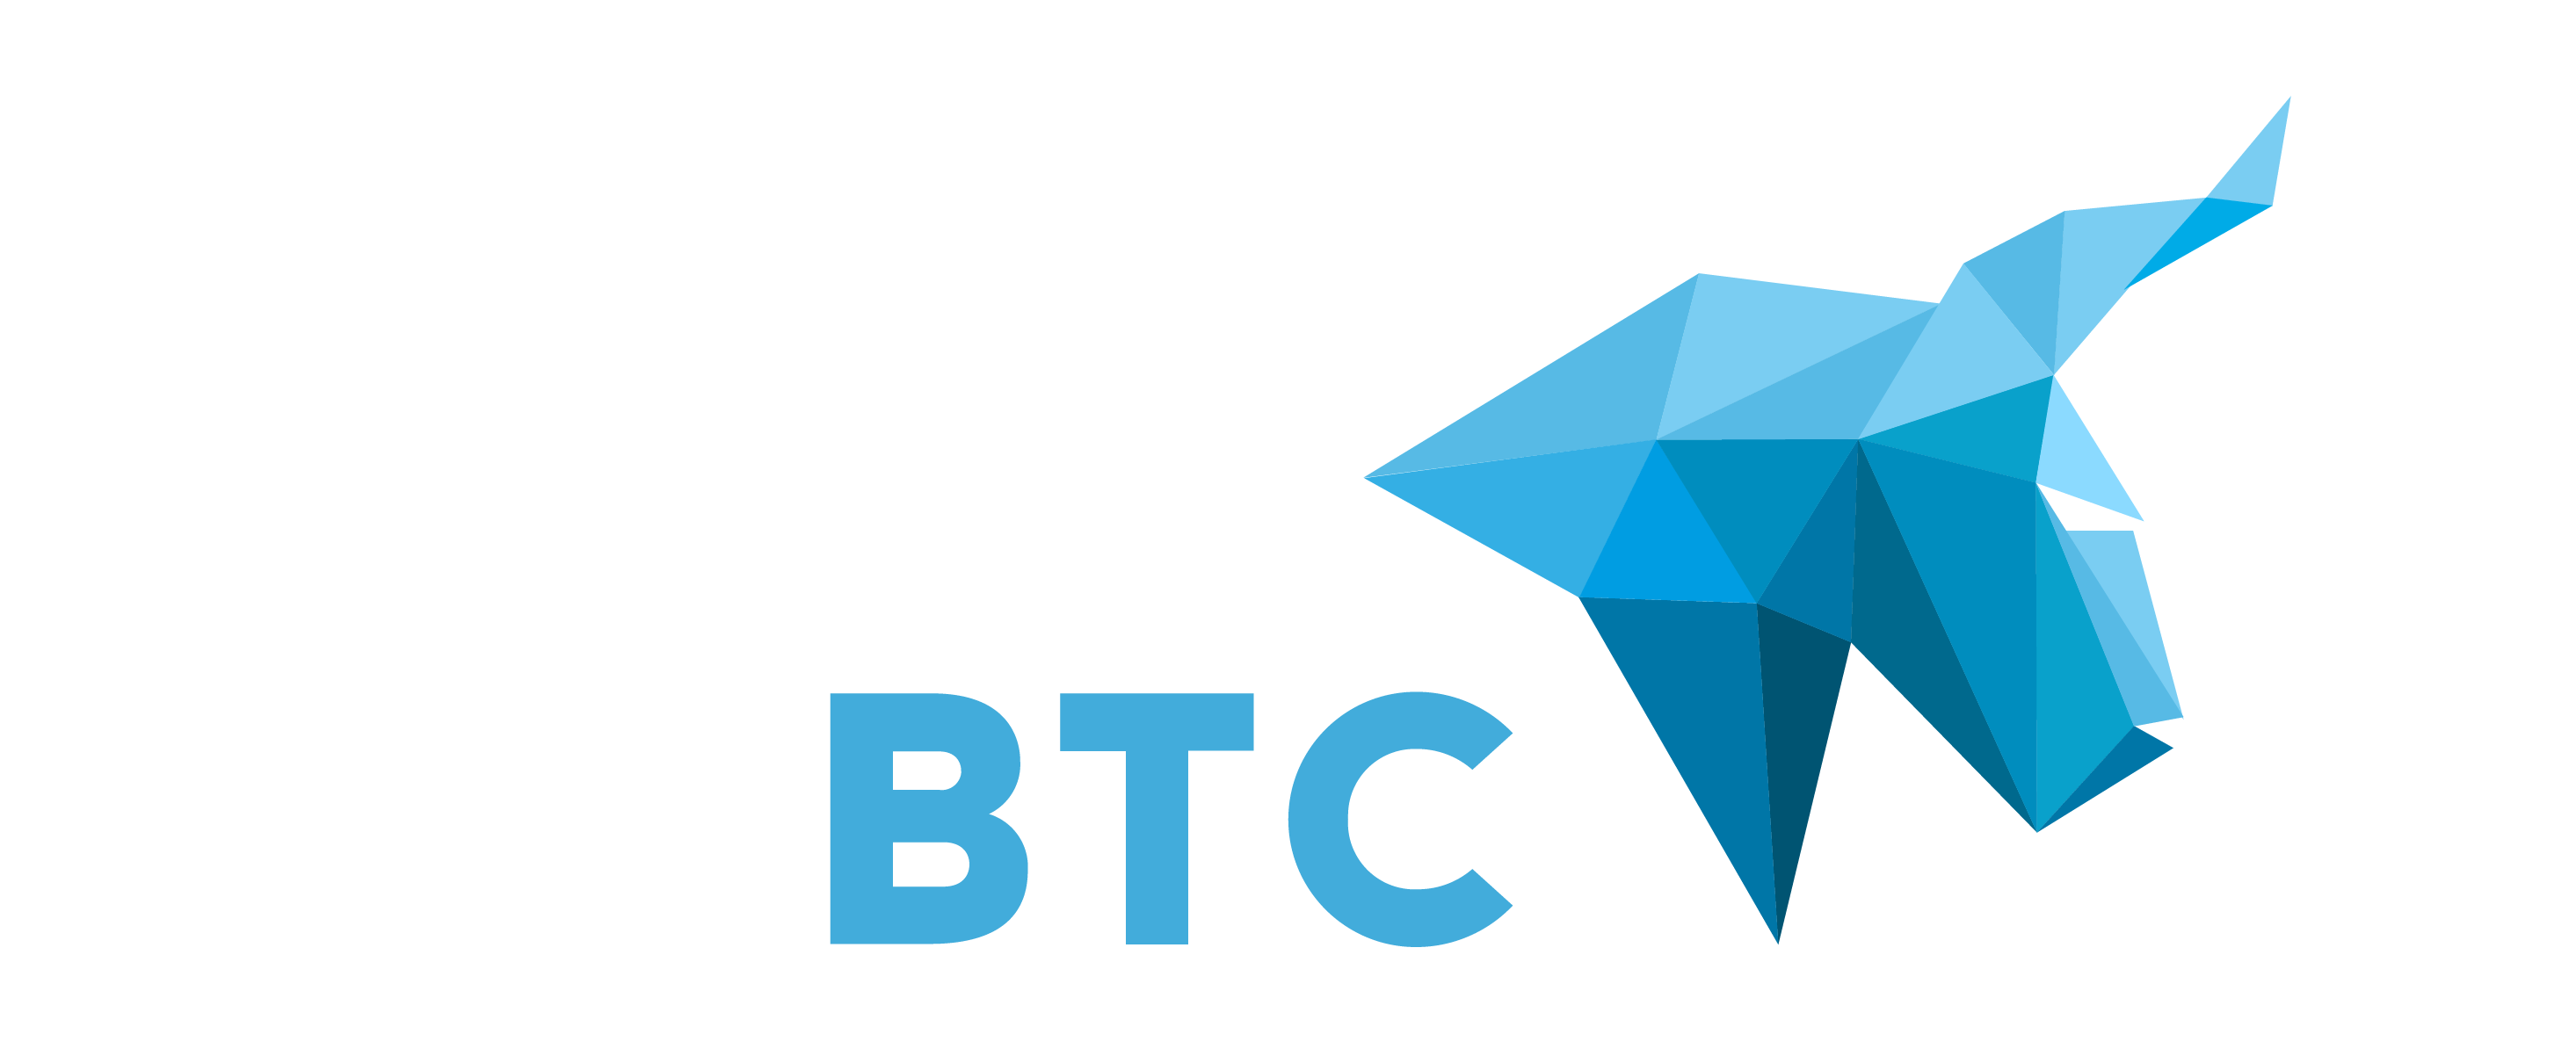 hitbtc logo